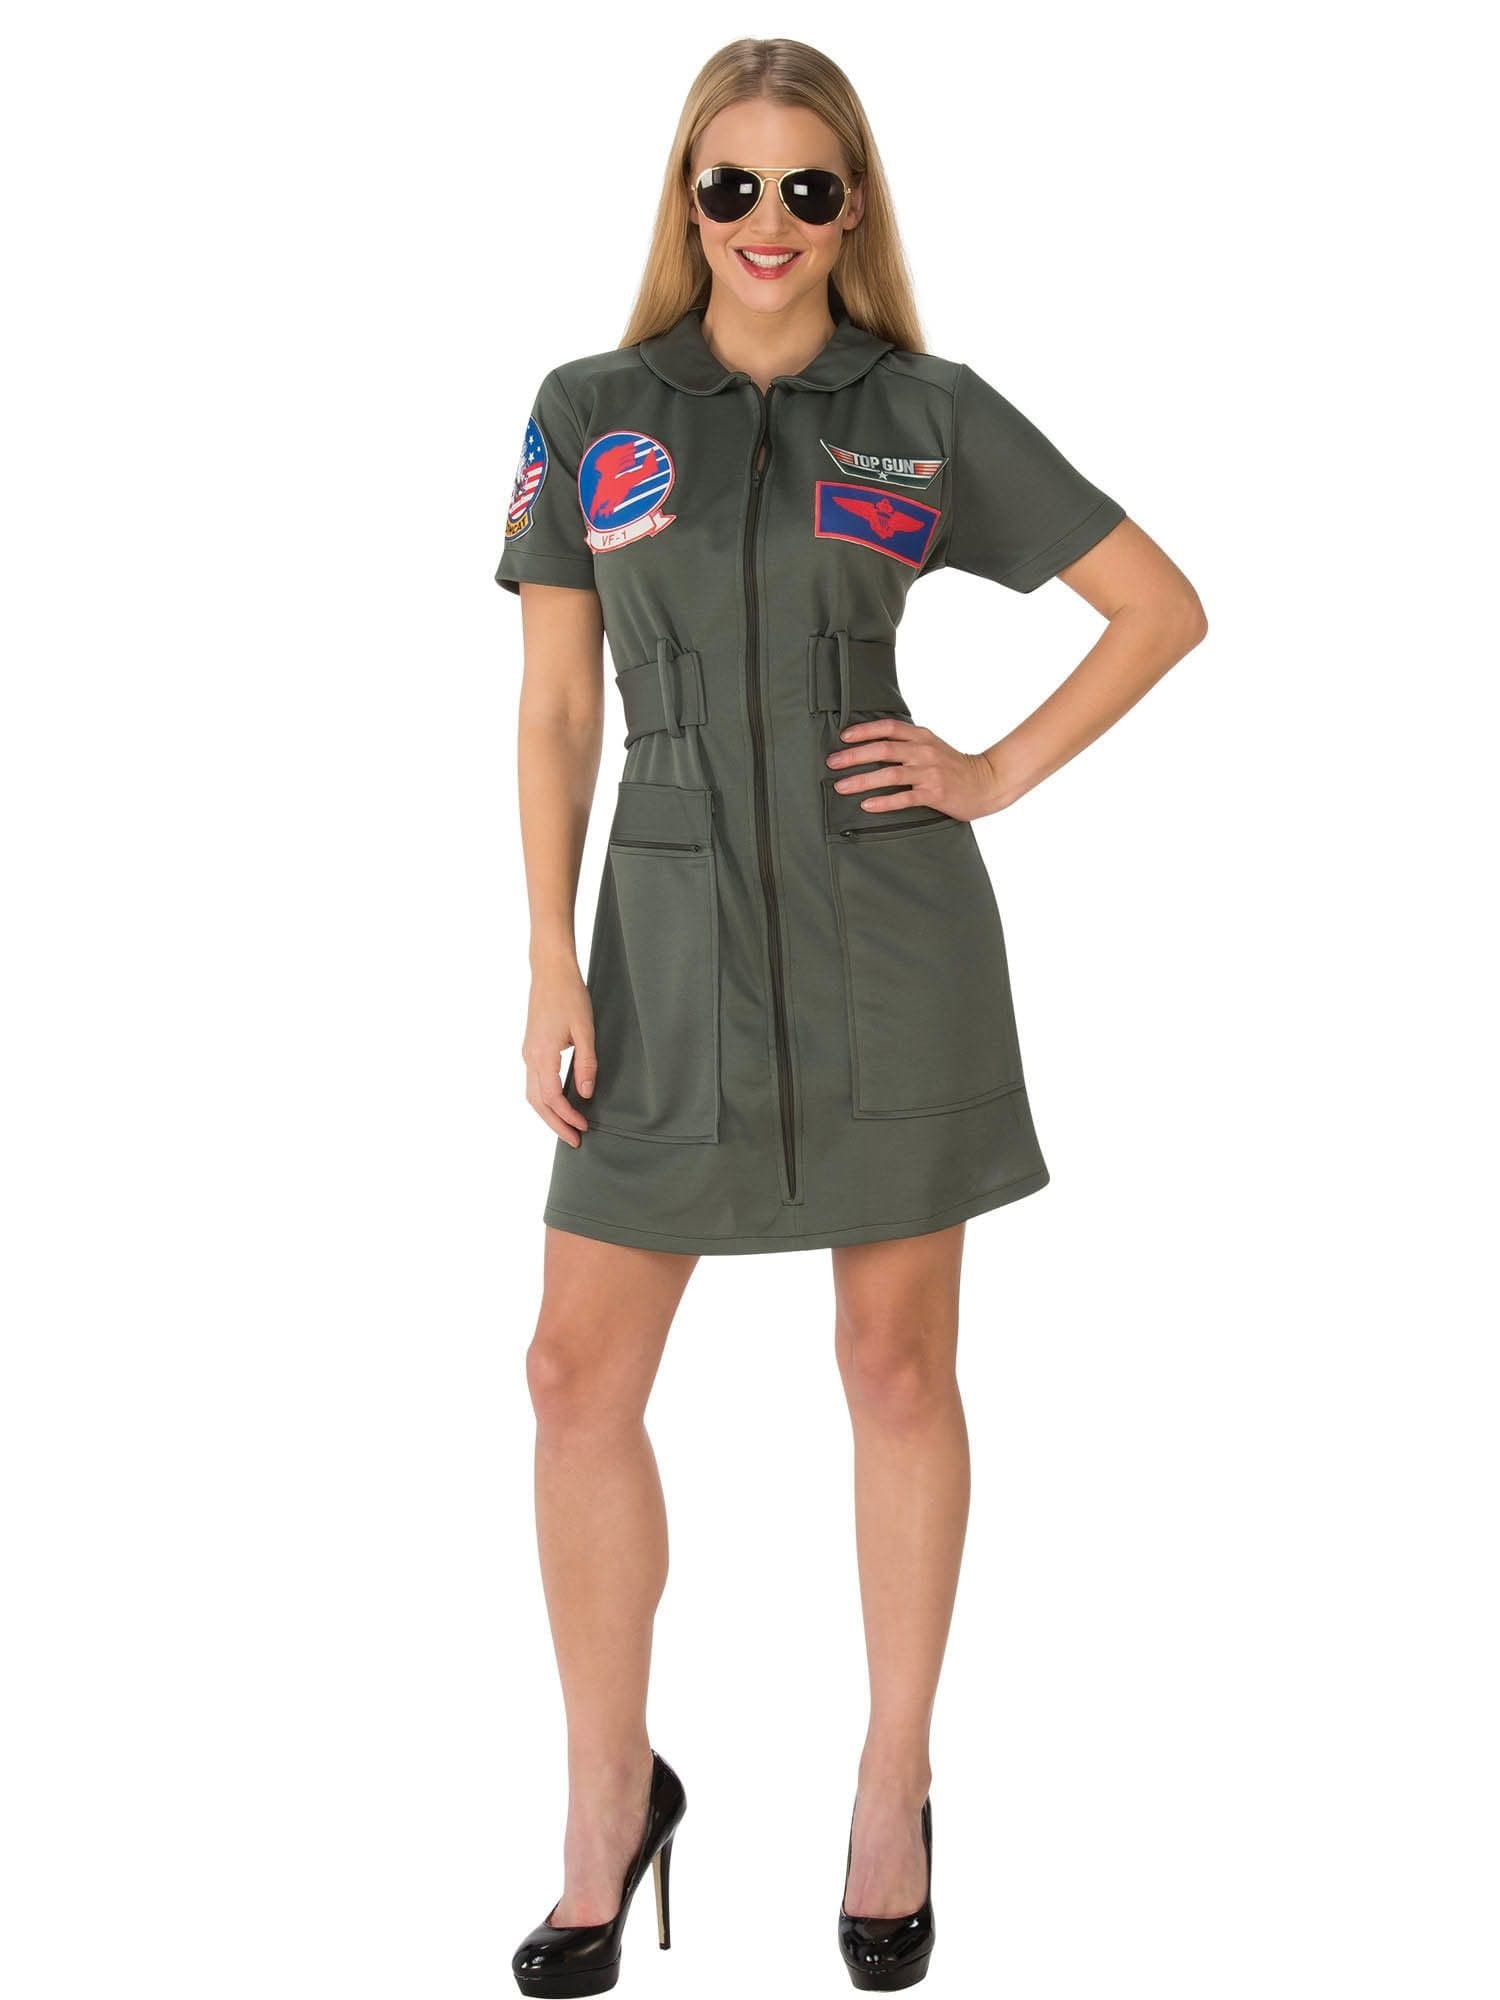 Top Gun Women's Costume – Paramount Shop